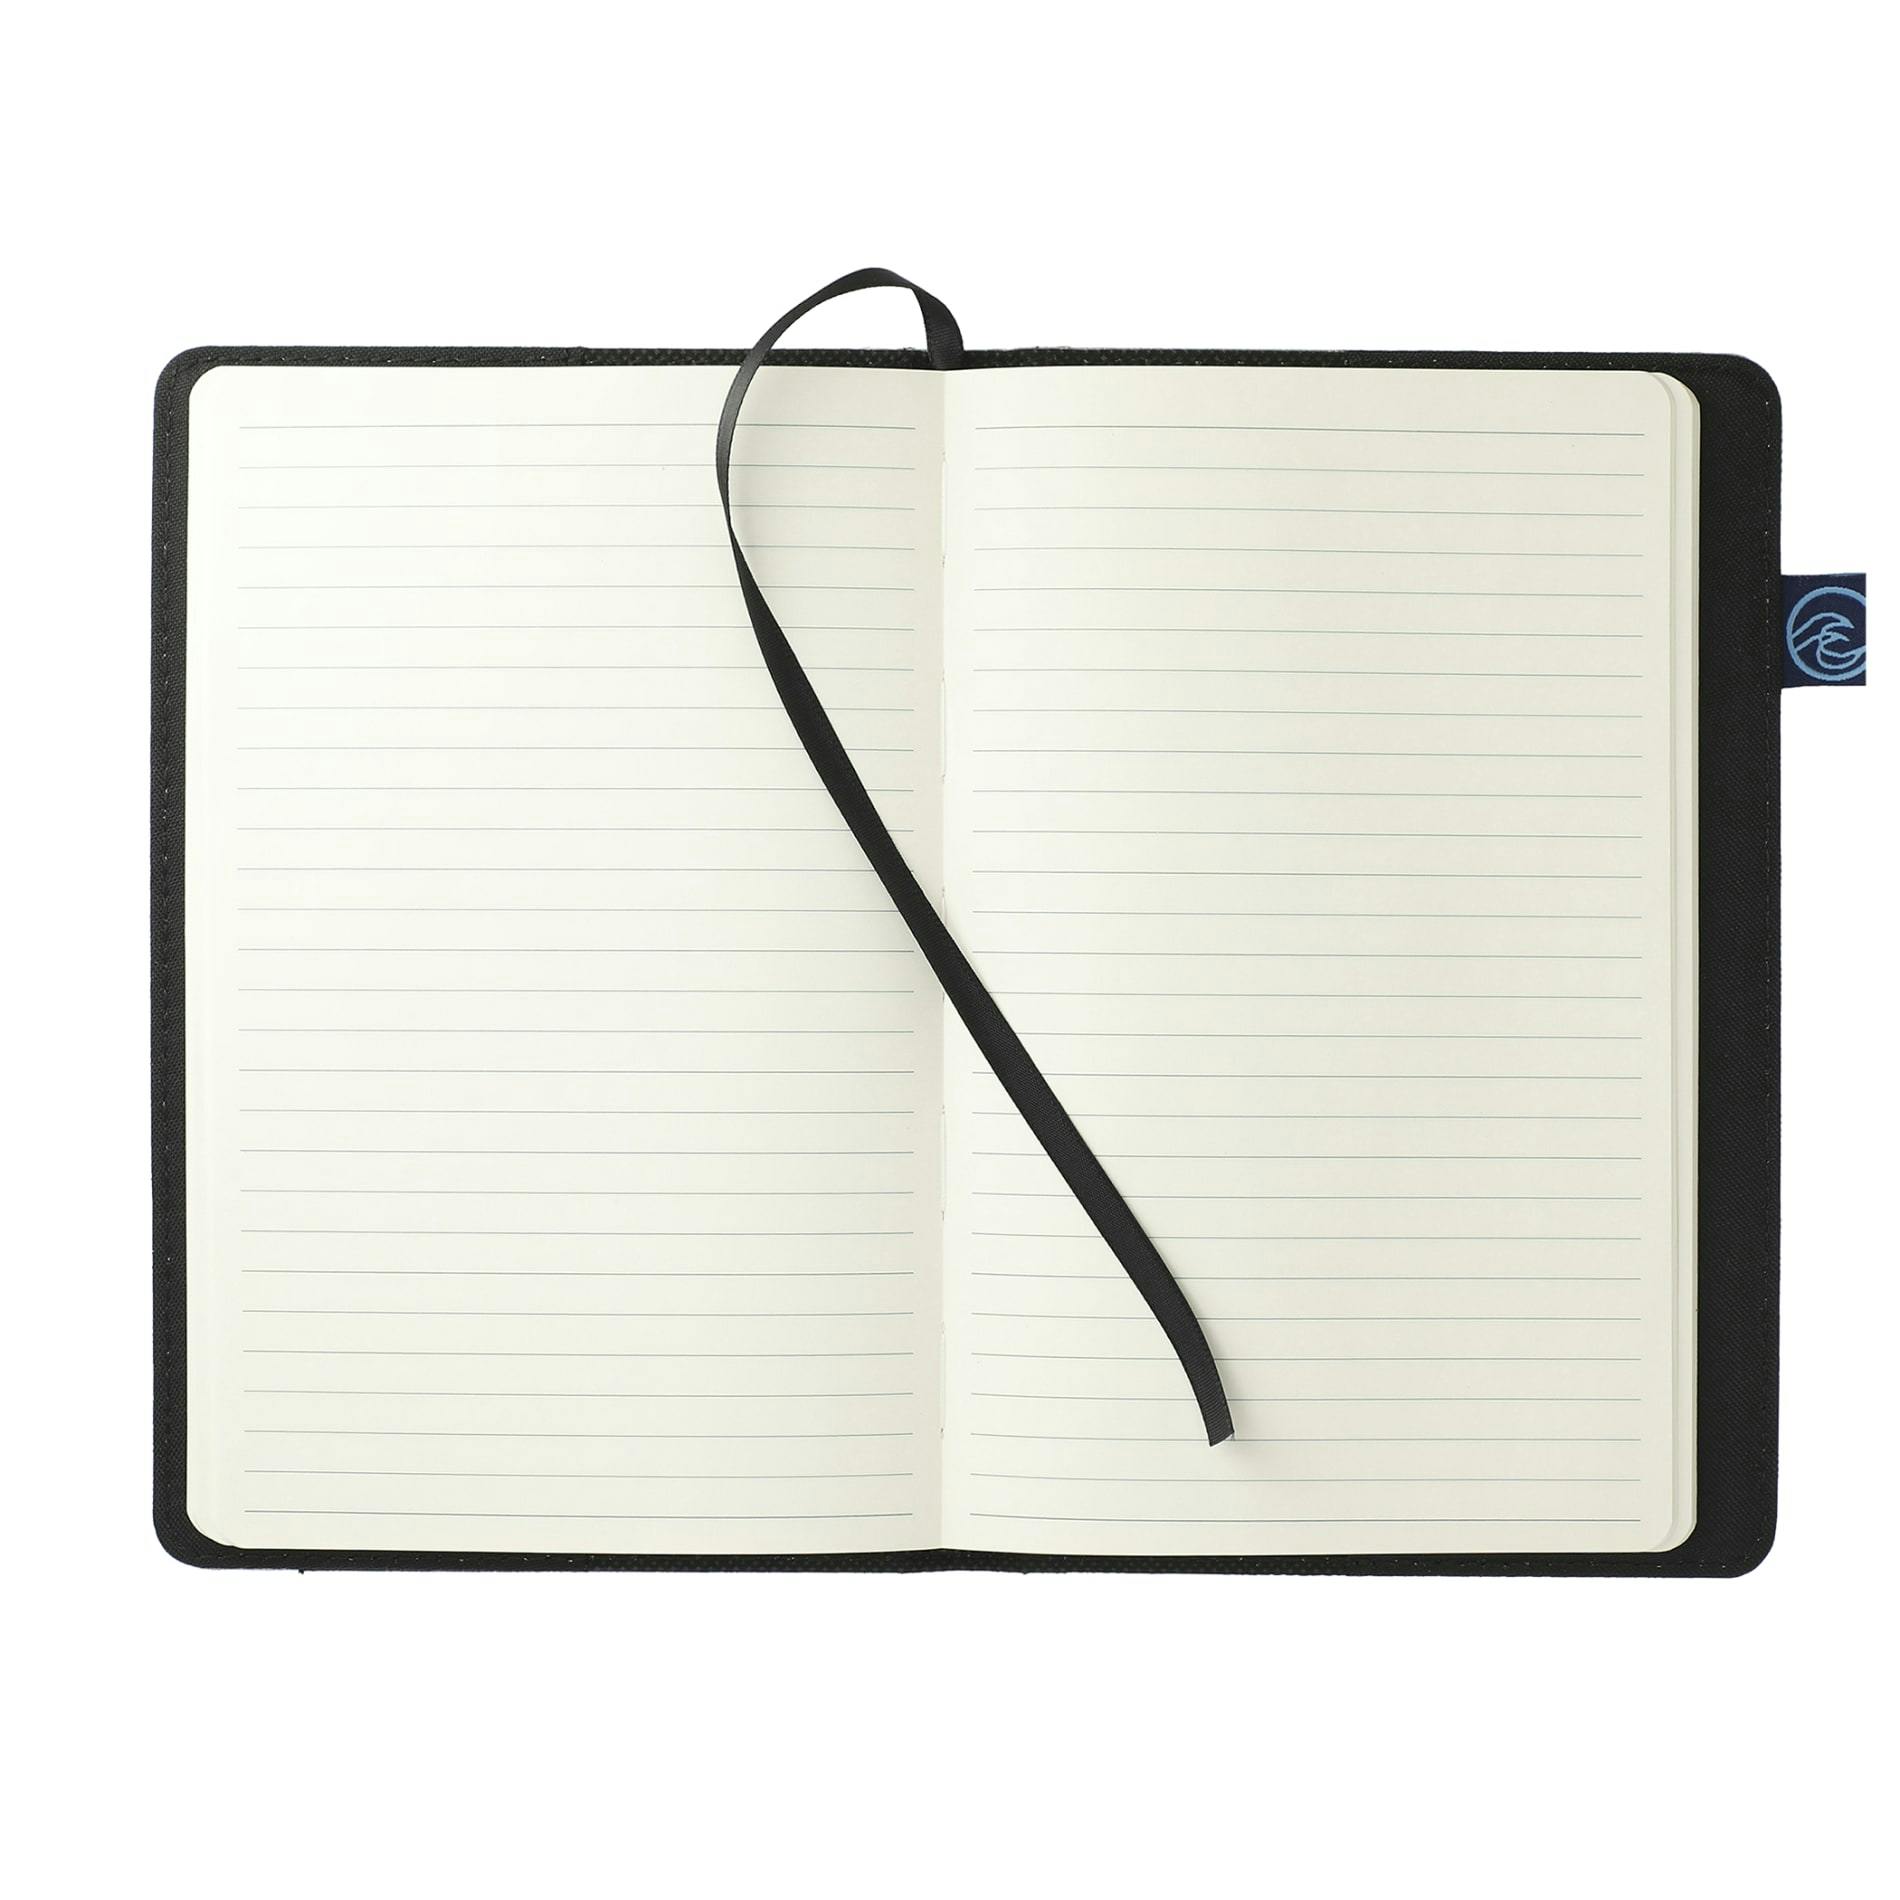 5.5" x 8.5" Repreve® Refillable JournalBook® - additional Image 2